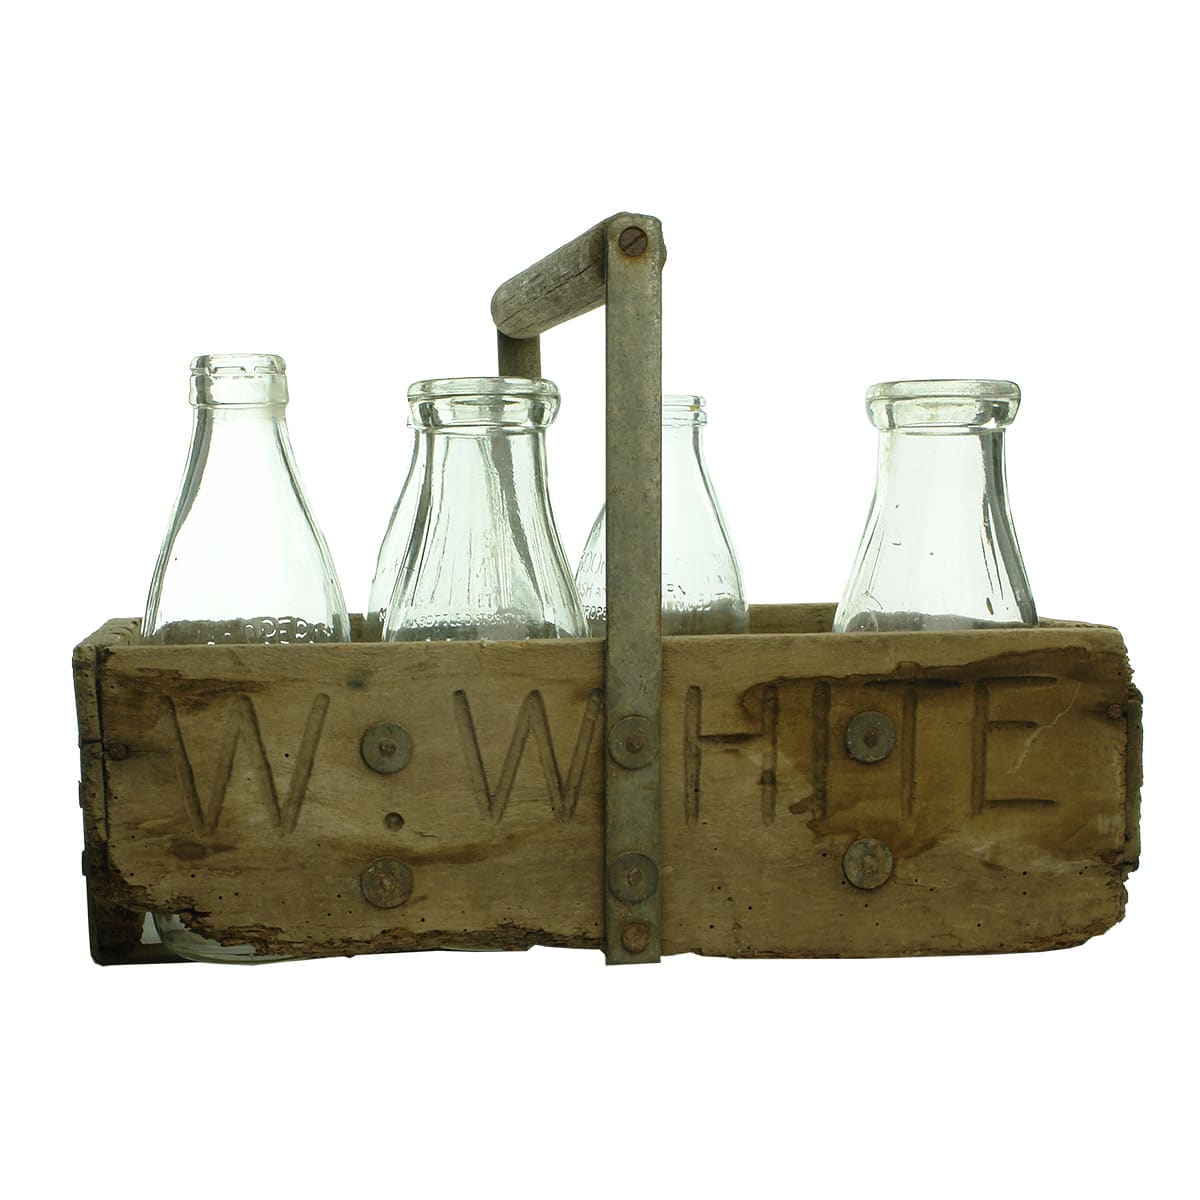 Wooden & Metal handled milk bottle carrier. W. White engraved in side. (Cotswolds Hils Dairy, Toorak, Victoria) Plus five milk bottles.